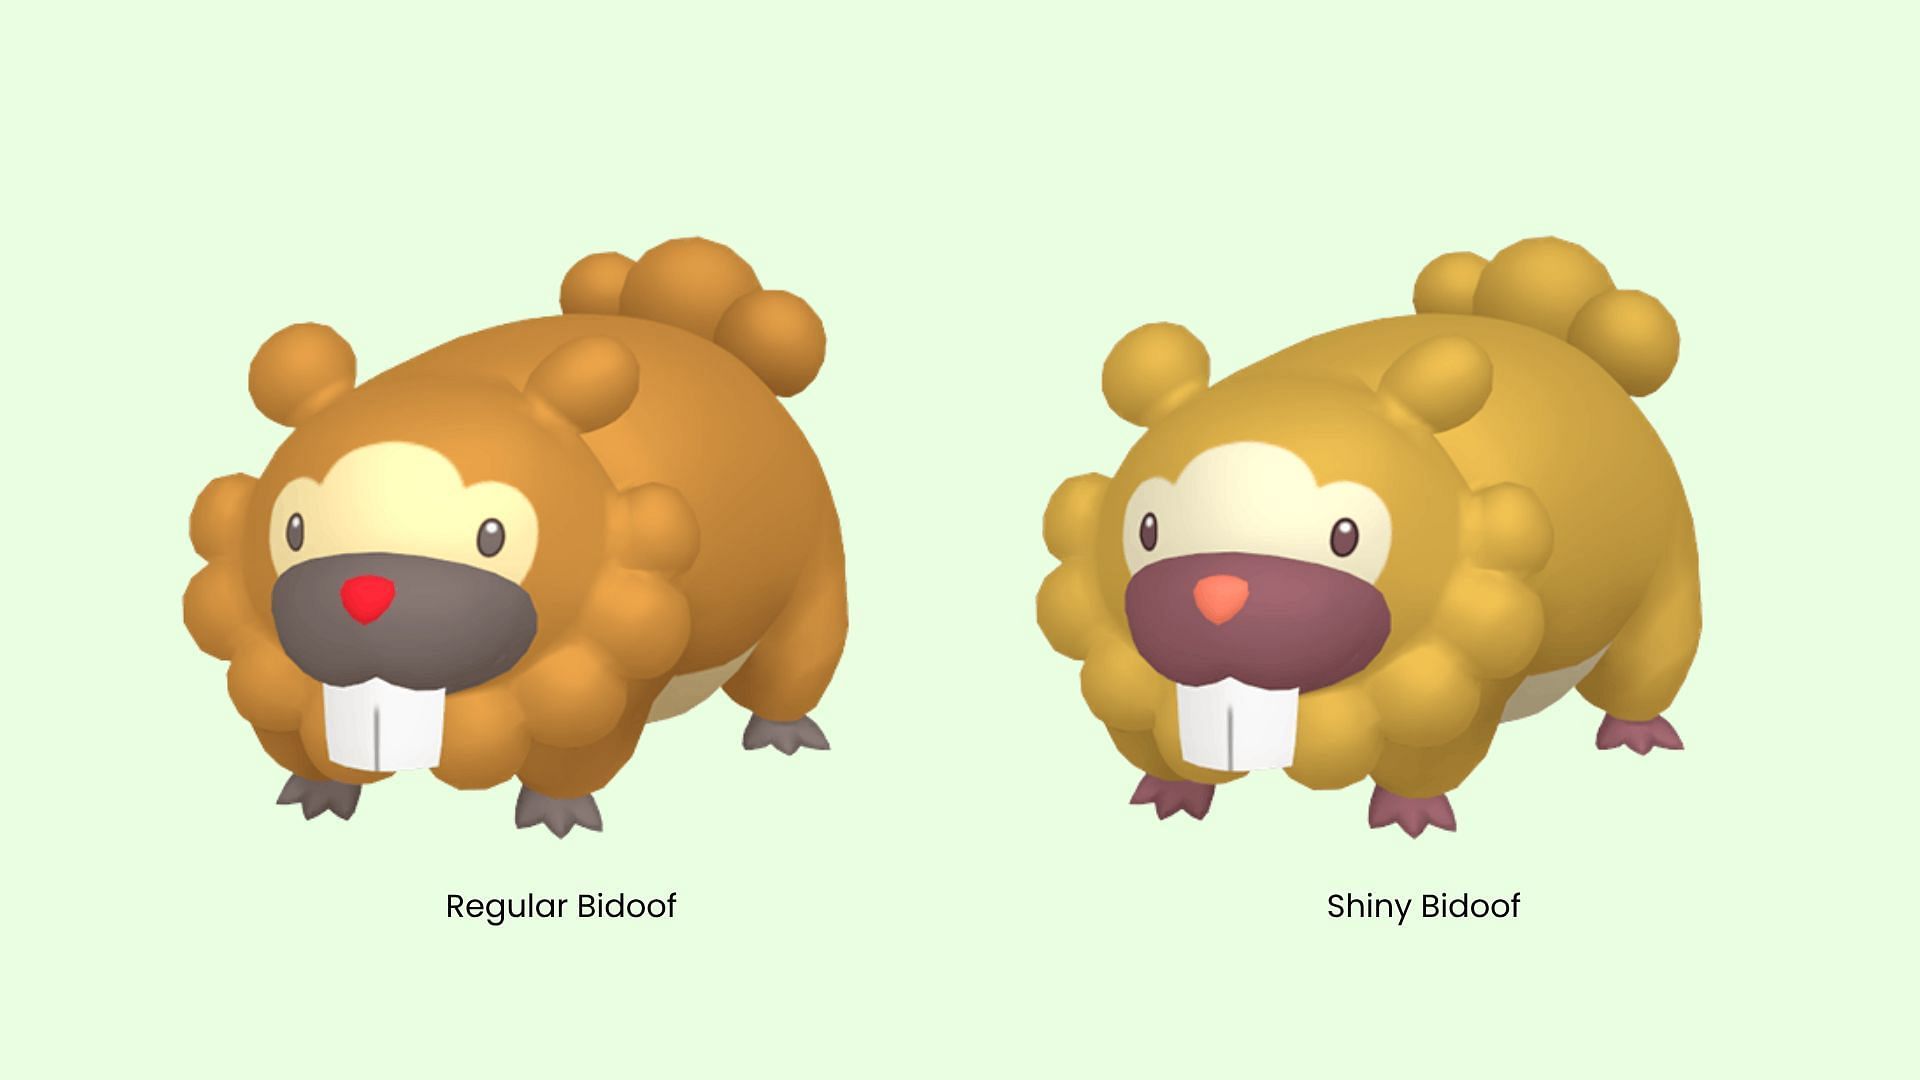 Why is shiny Bidoof so popular in Pokemon GO?